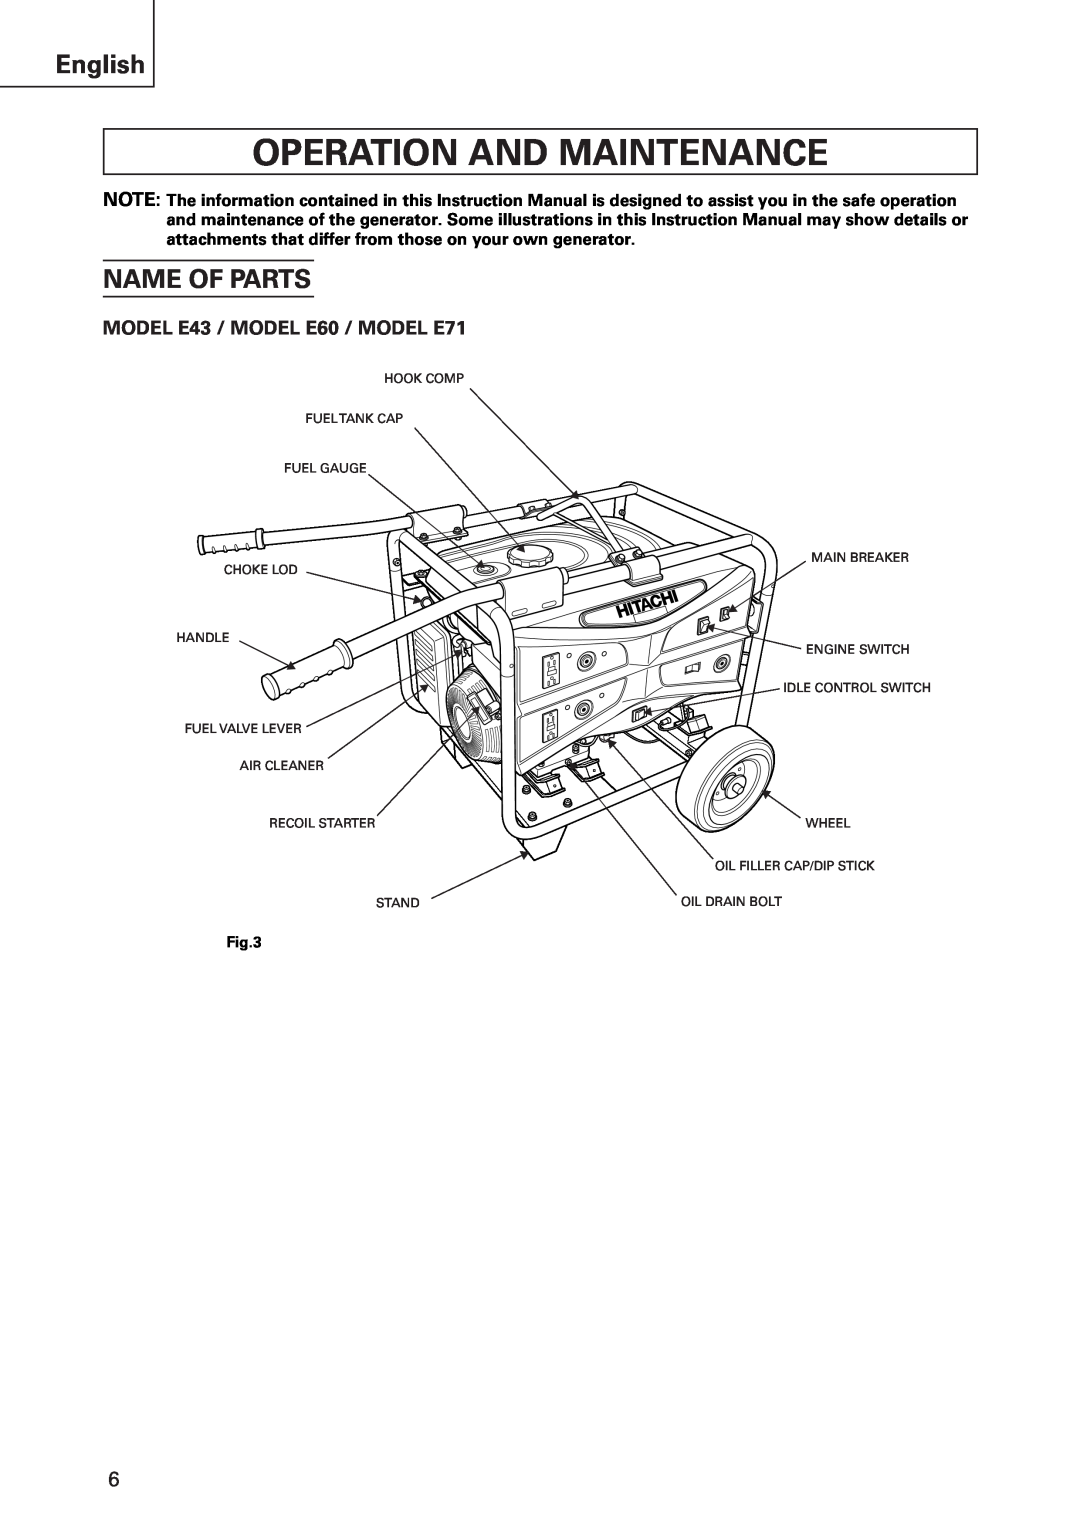 Hitachi instruction manual Operation And Maintenance, Name Of Parts, MODEL E43 / MODEL E60 / MODEL E71, English 